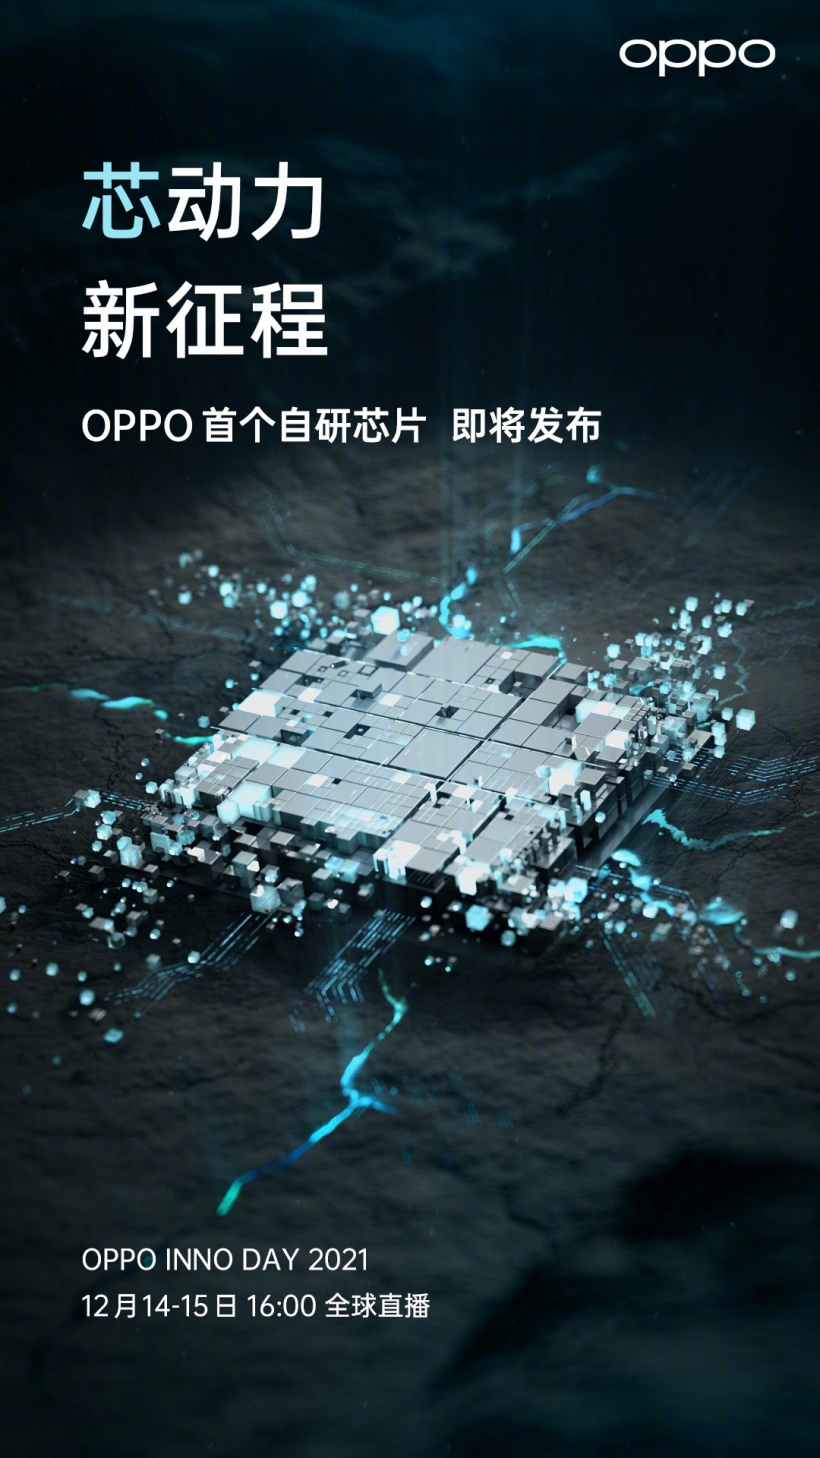 OPPO将于12月14日 公布首款自研芯片